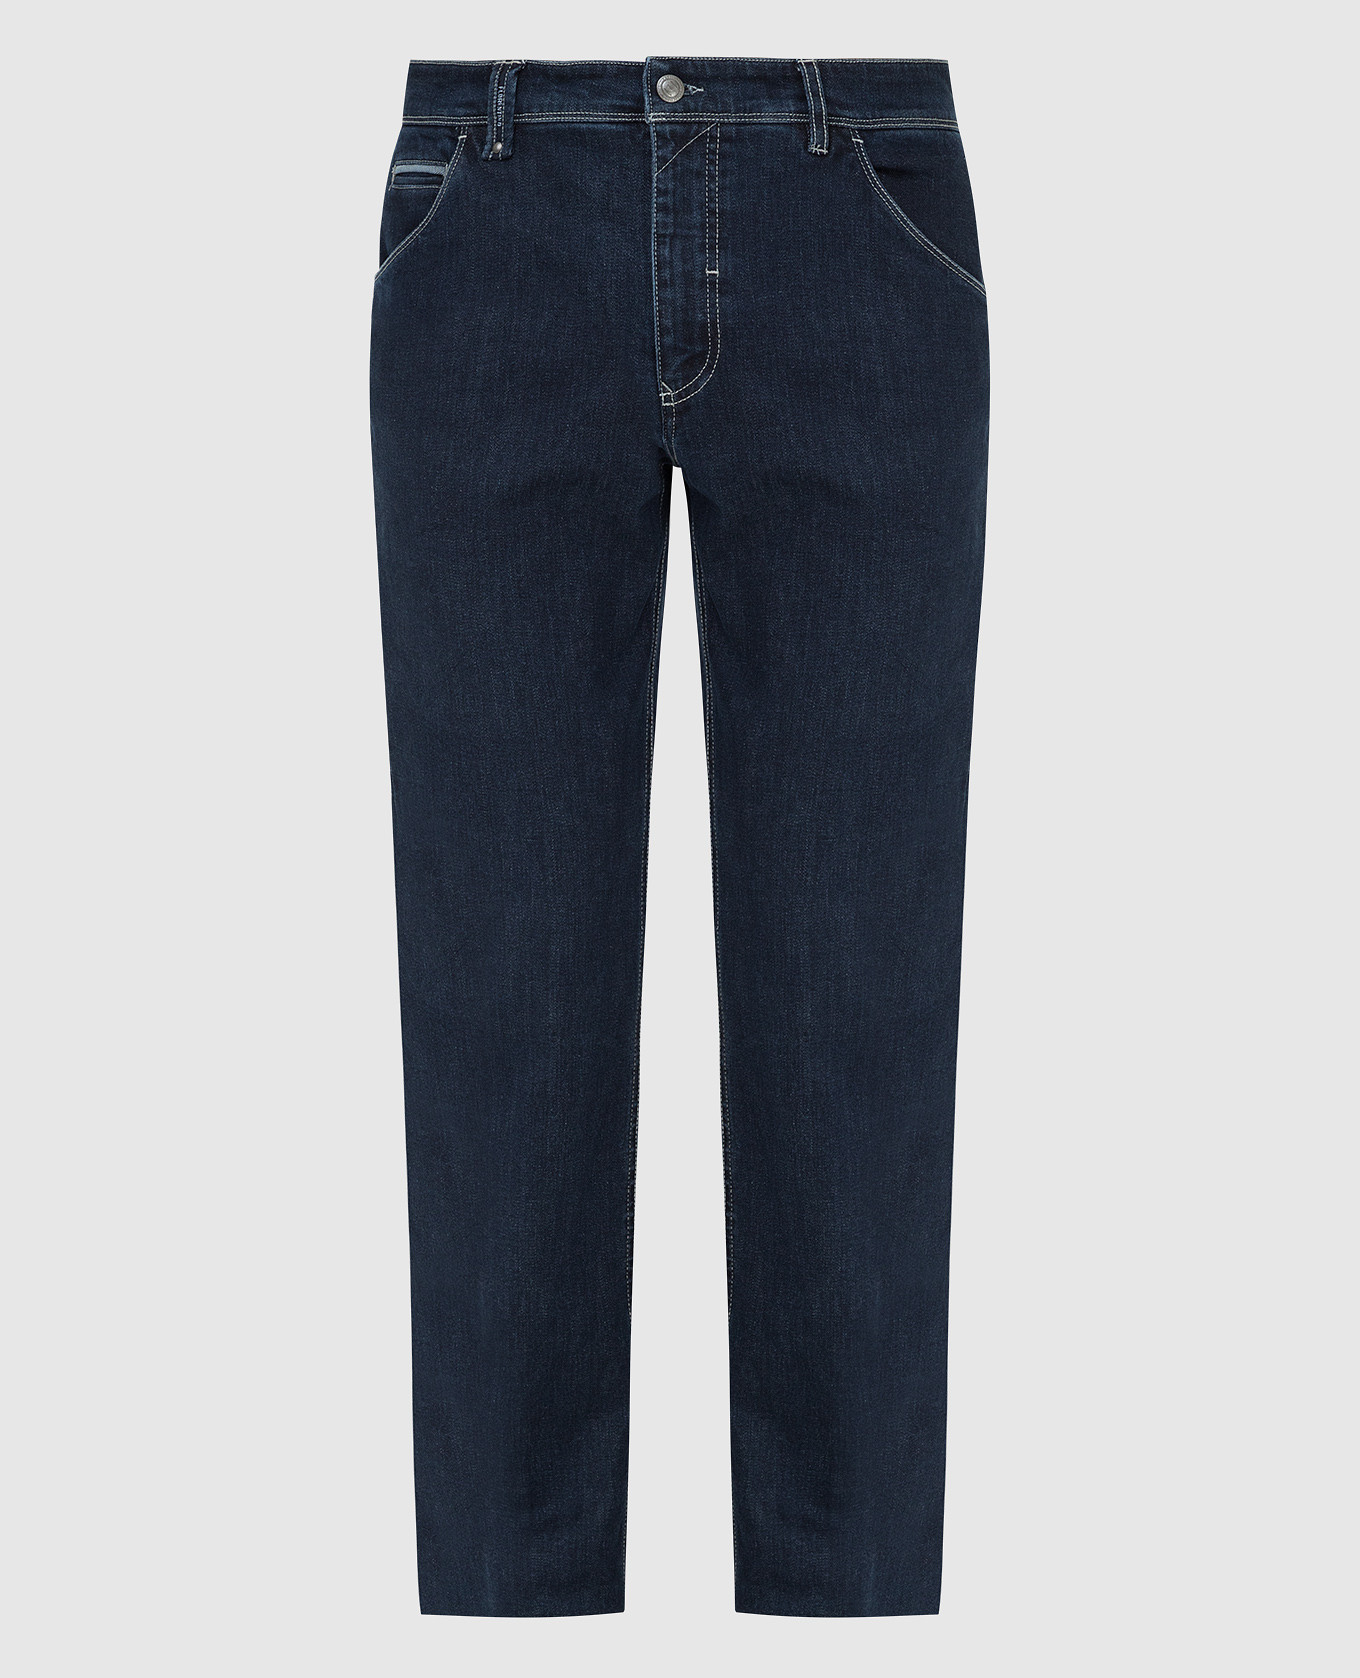 Florentino - Navy blue jeans 221537120707 buy at Symbol